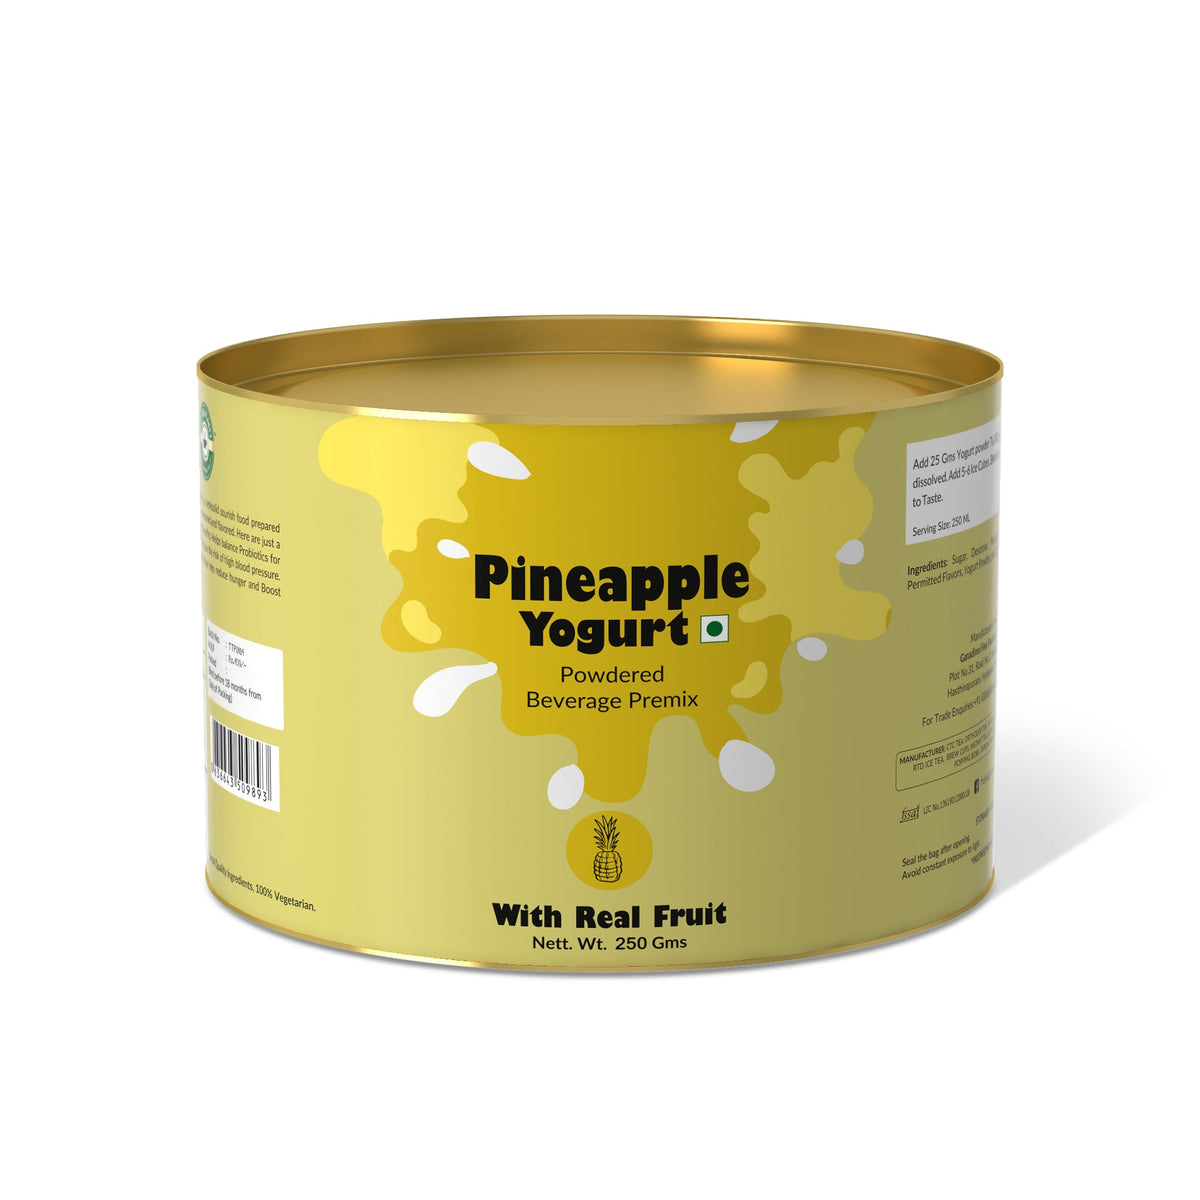 Pineaaple Yogurt Mix